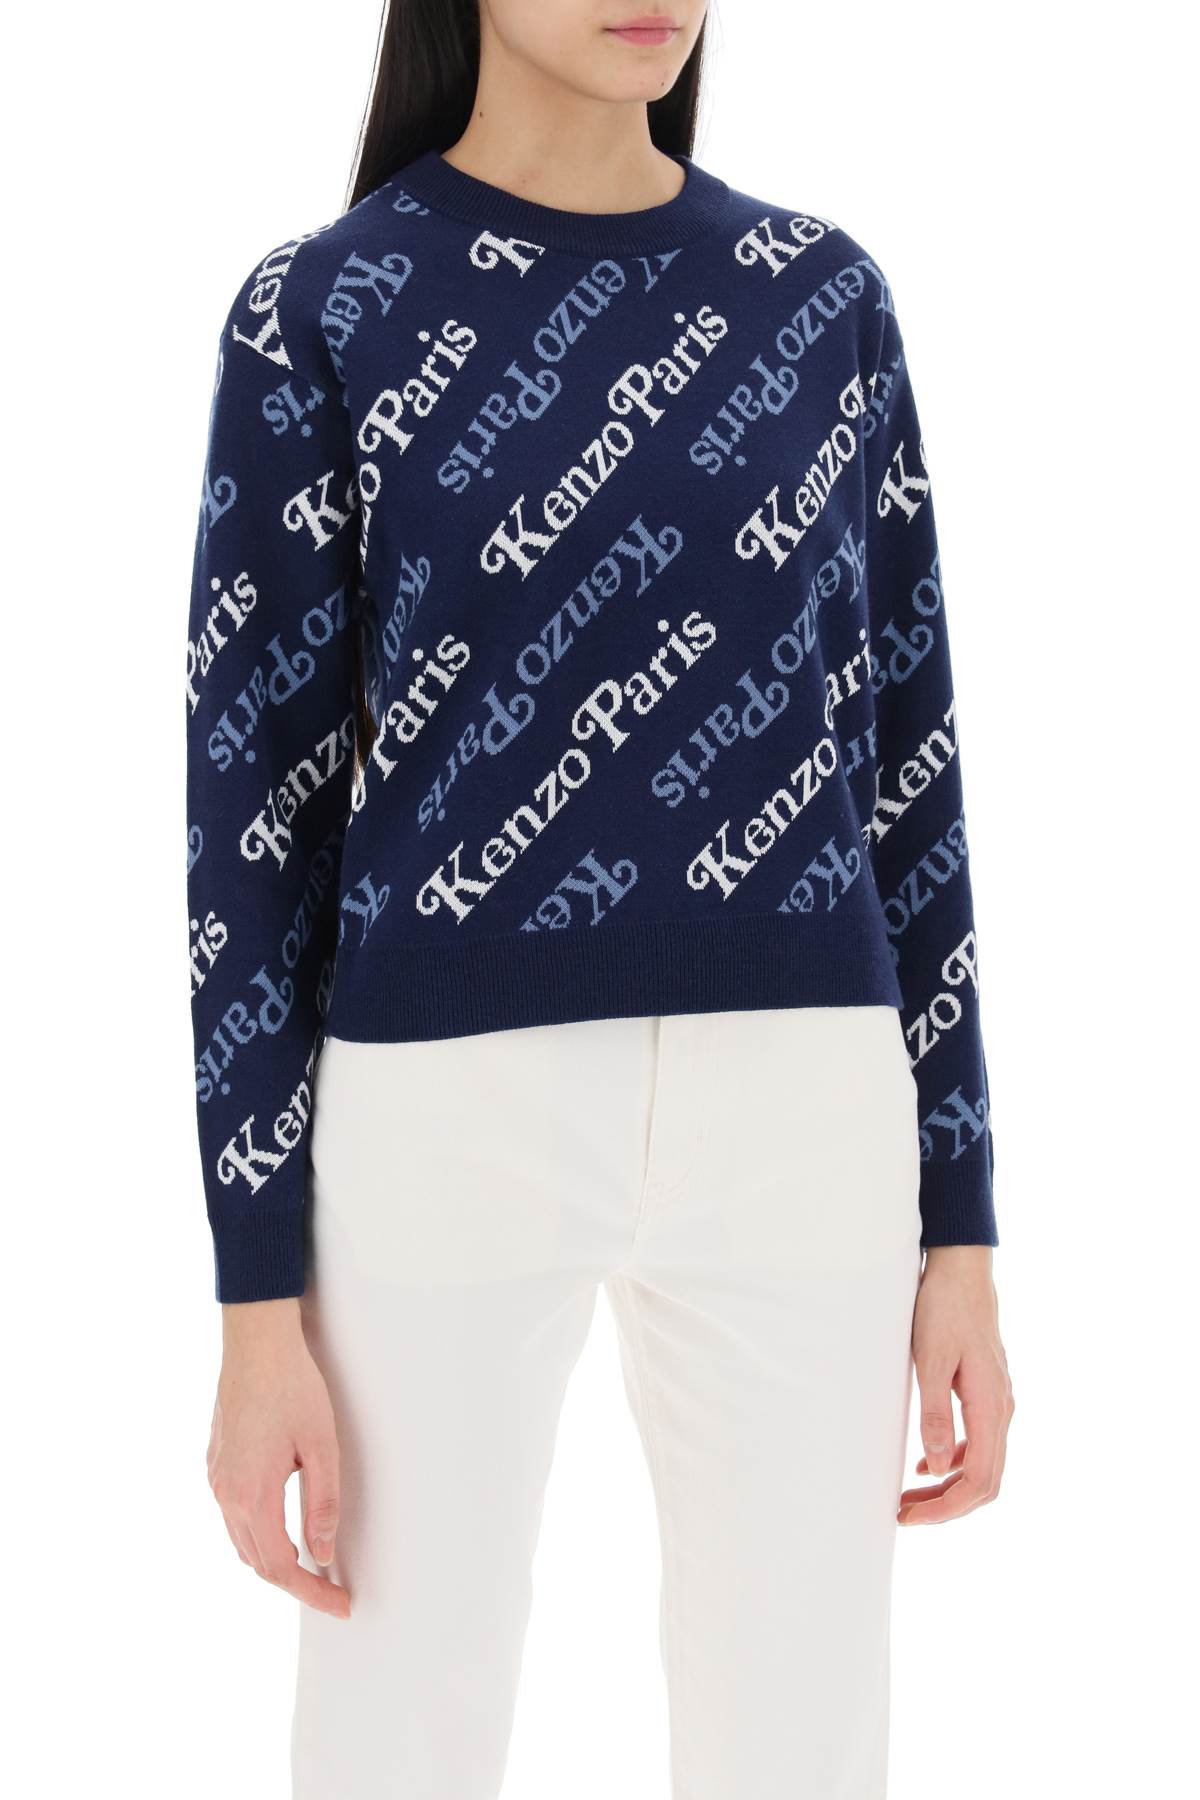 Kenzo sweater with logo pattern-1